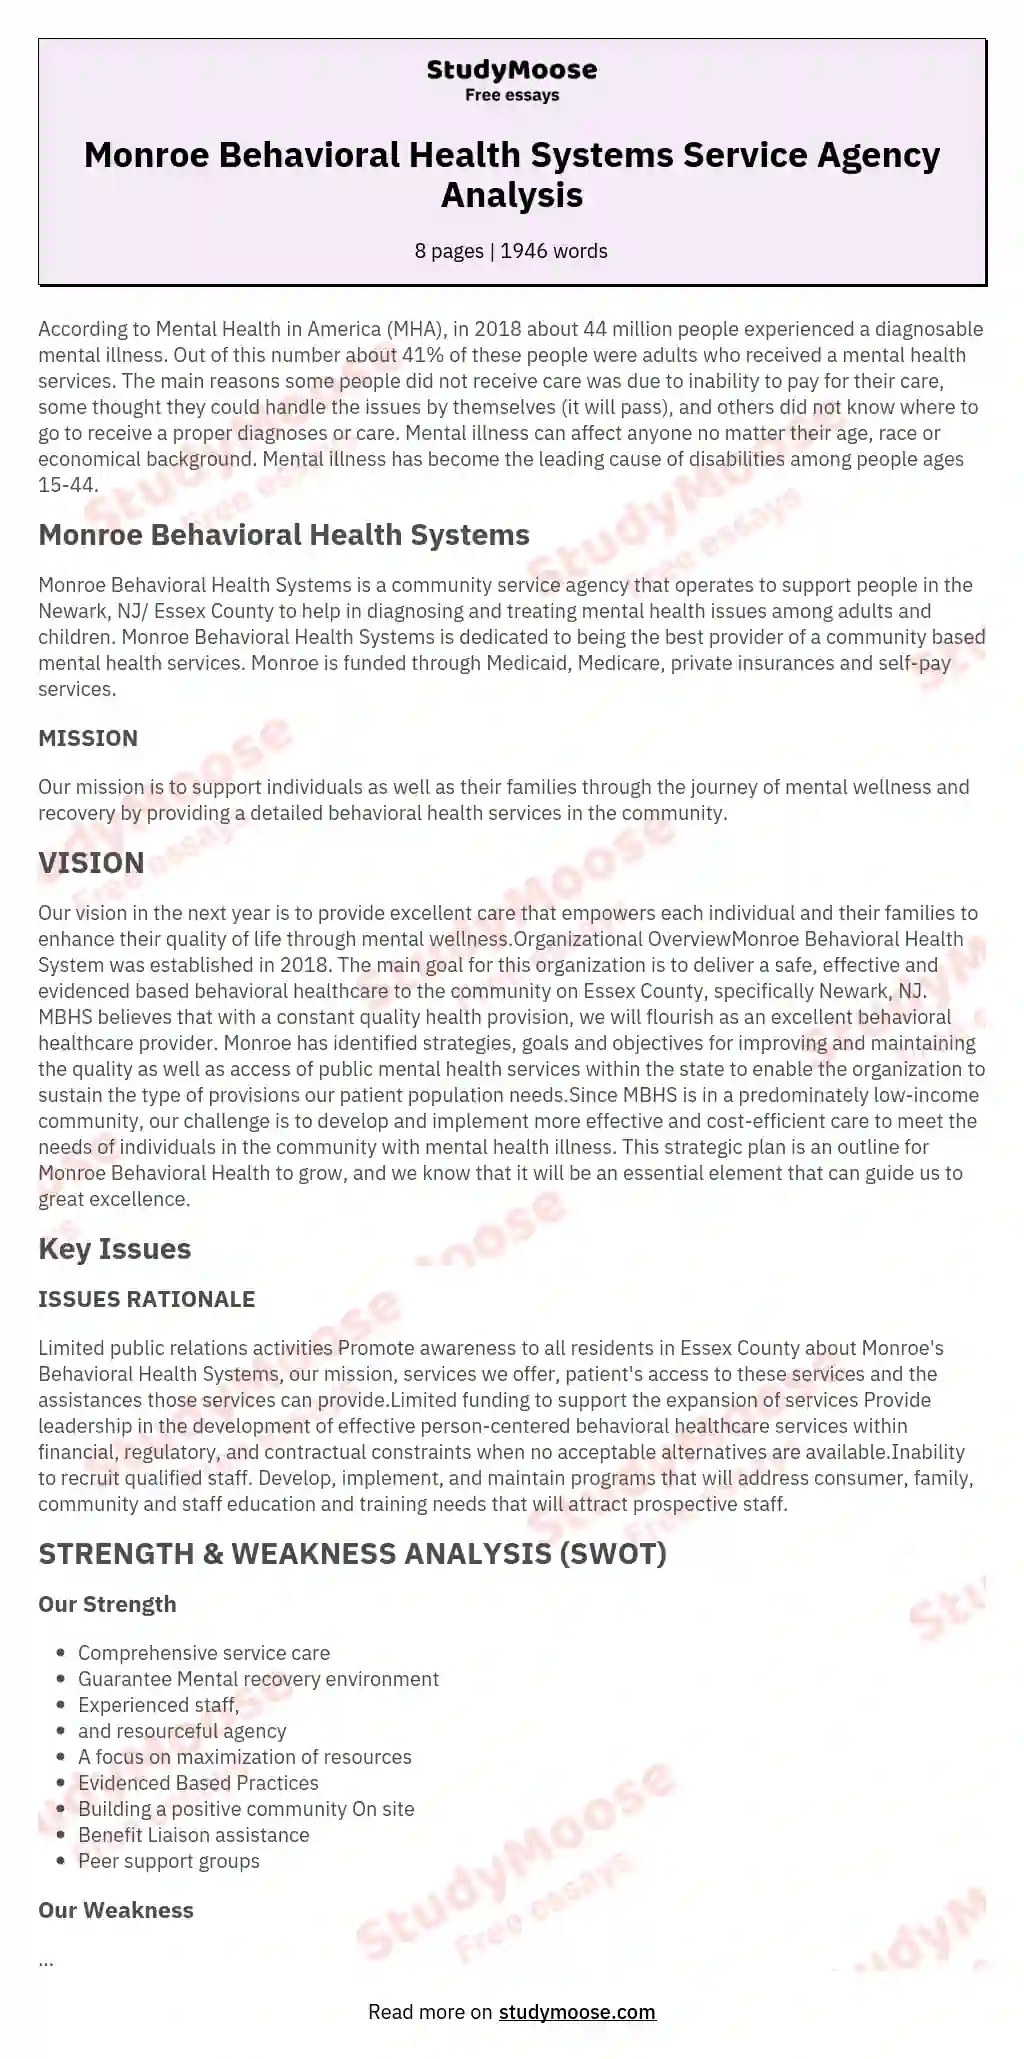 Monroe Behavioral Health Systems Service Agency Analysis essay